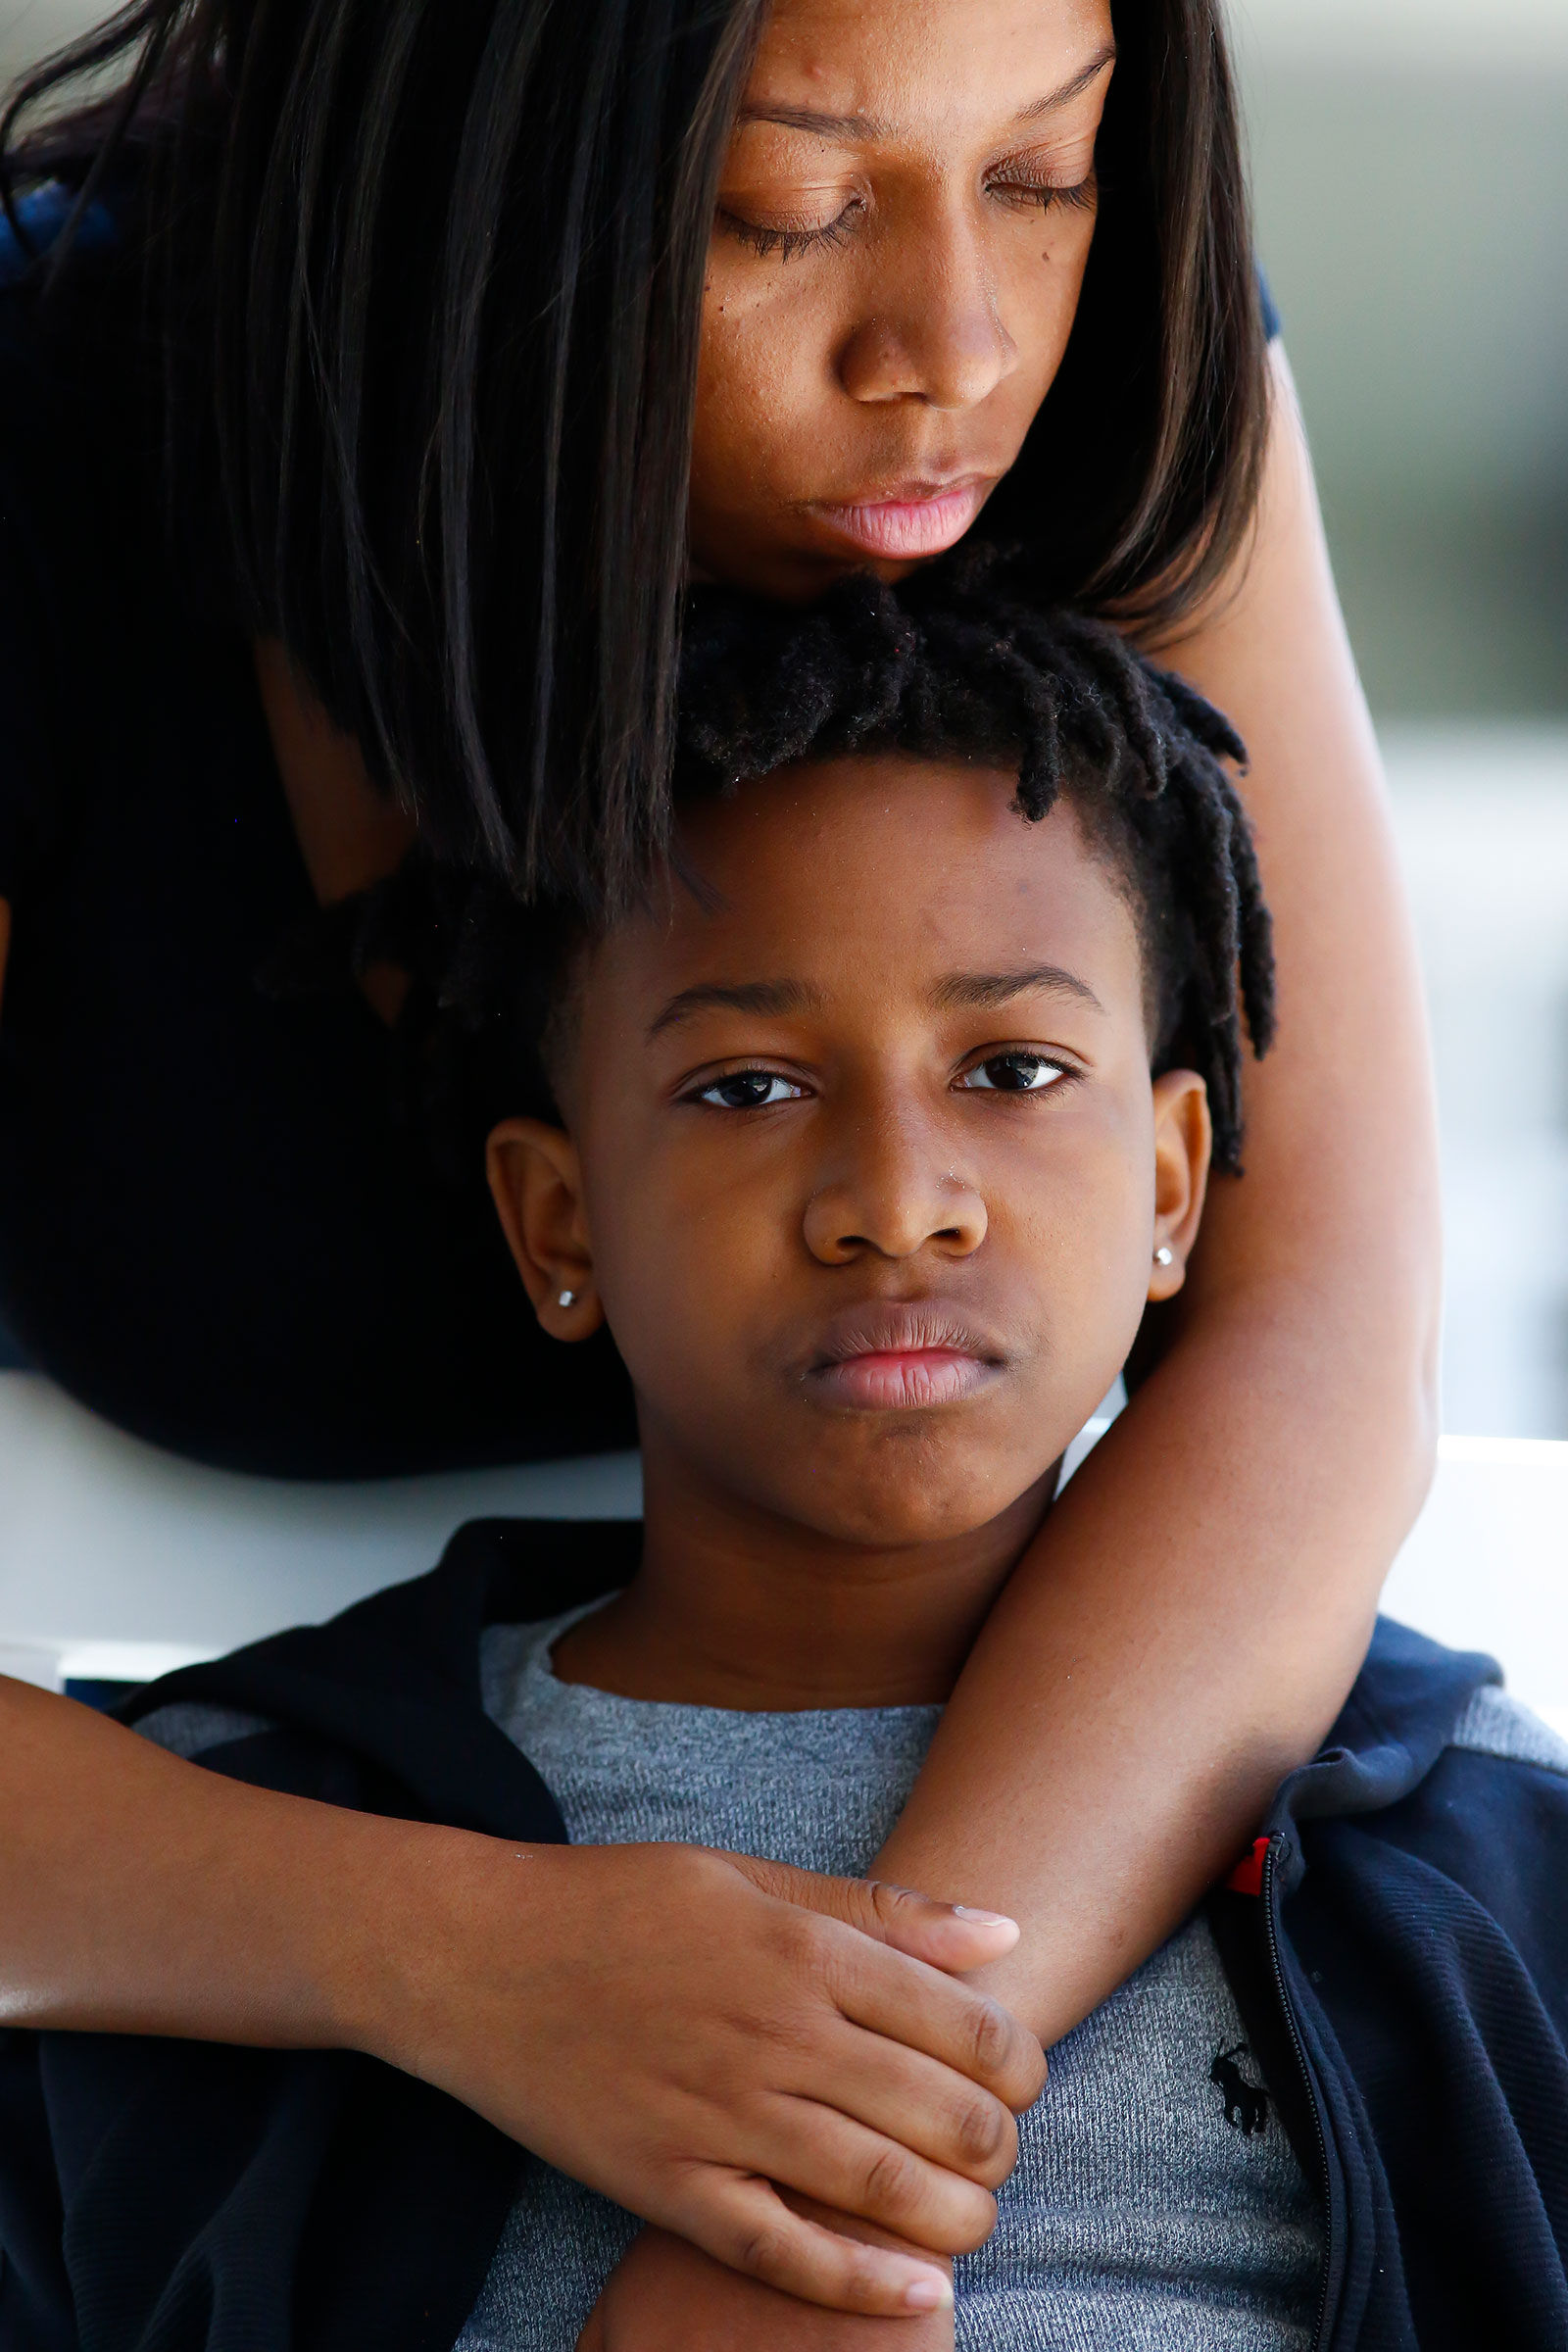 Ashley Martin, Franklin’s ex-girlfriend, and their 13-year-old son Nehemiah